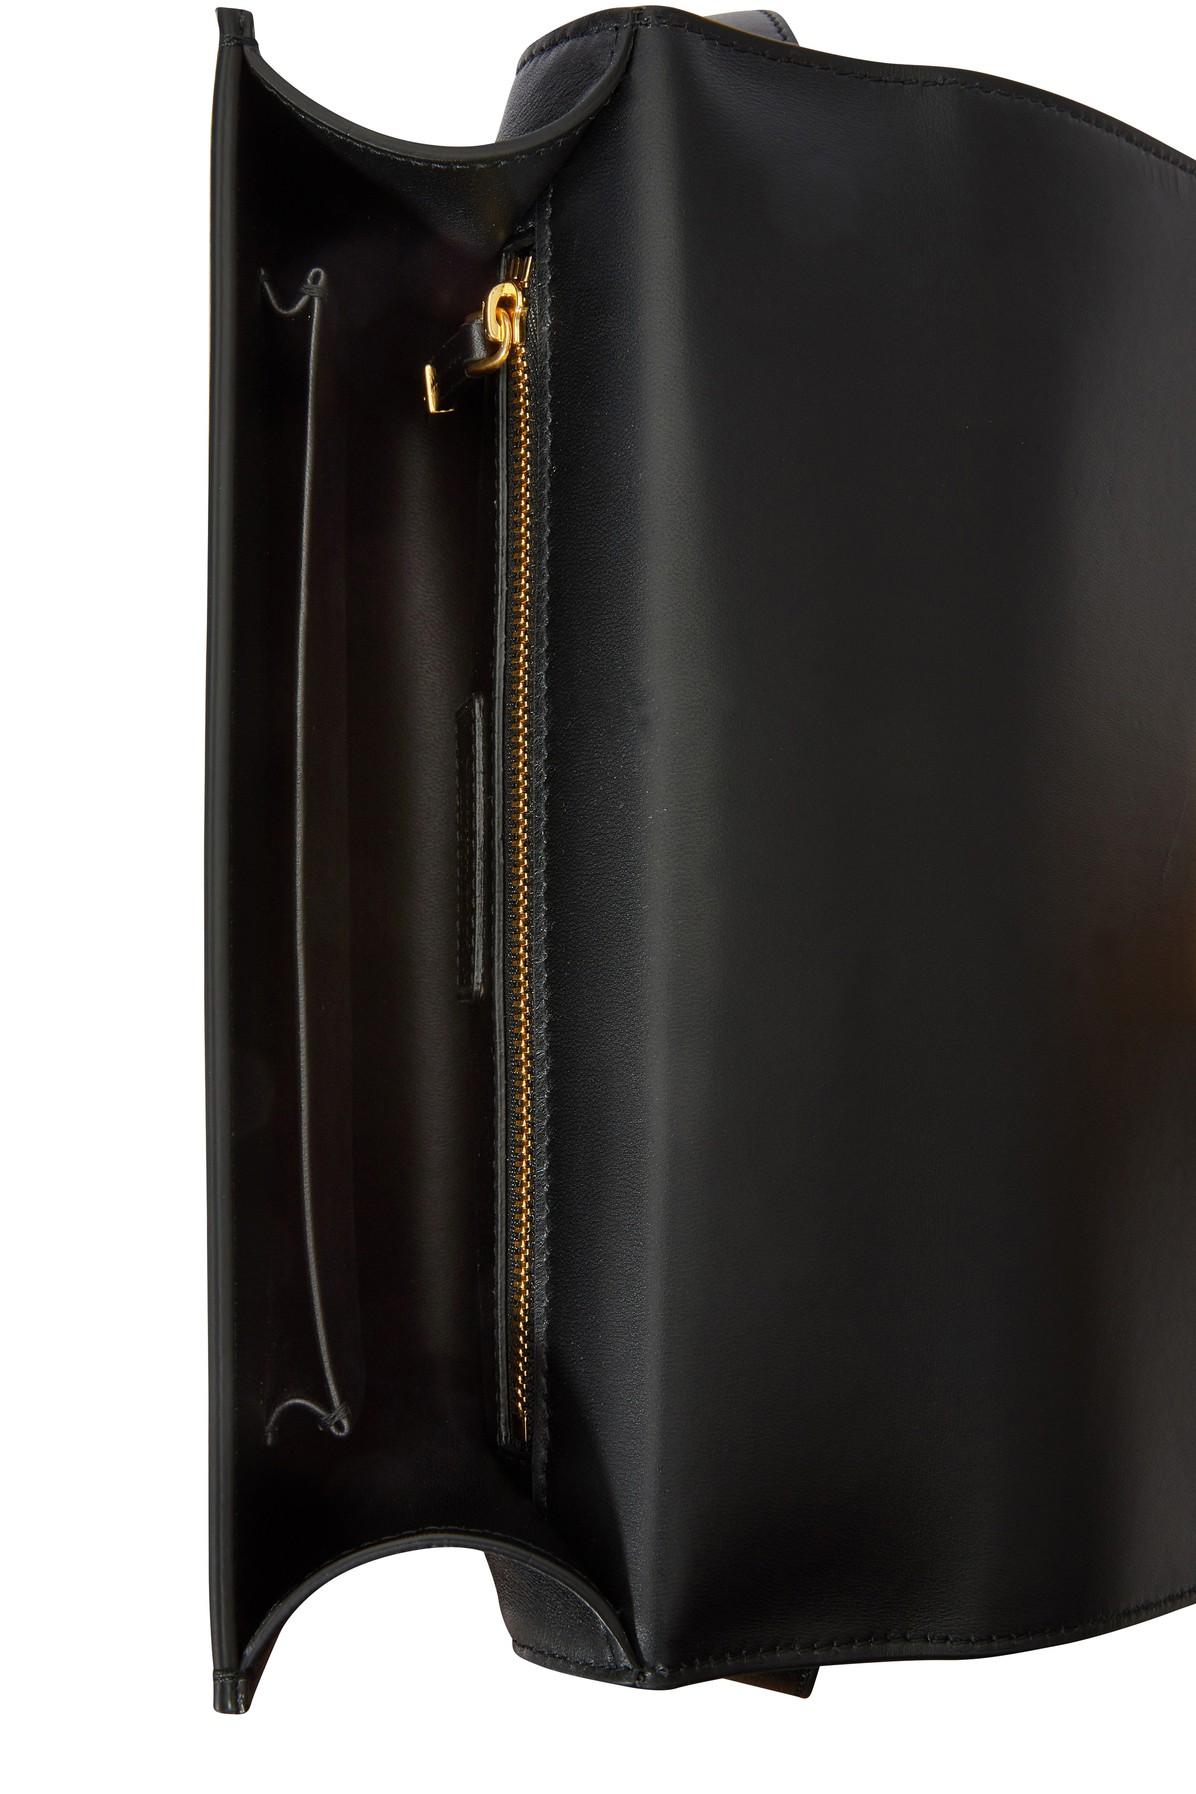 Dior Montaigne 30 Black Smooth Calfskin Bag - Klueles - shop on klueles